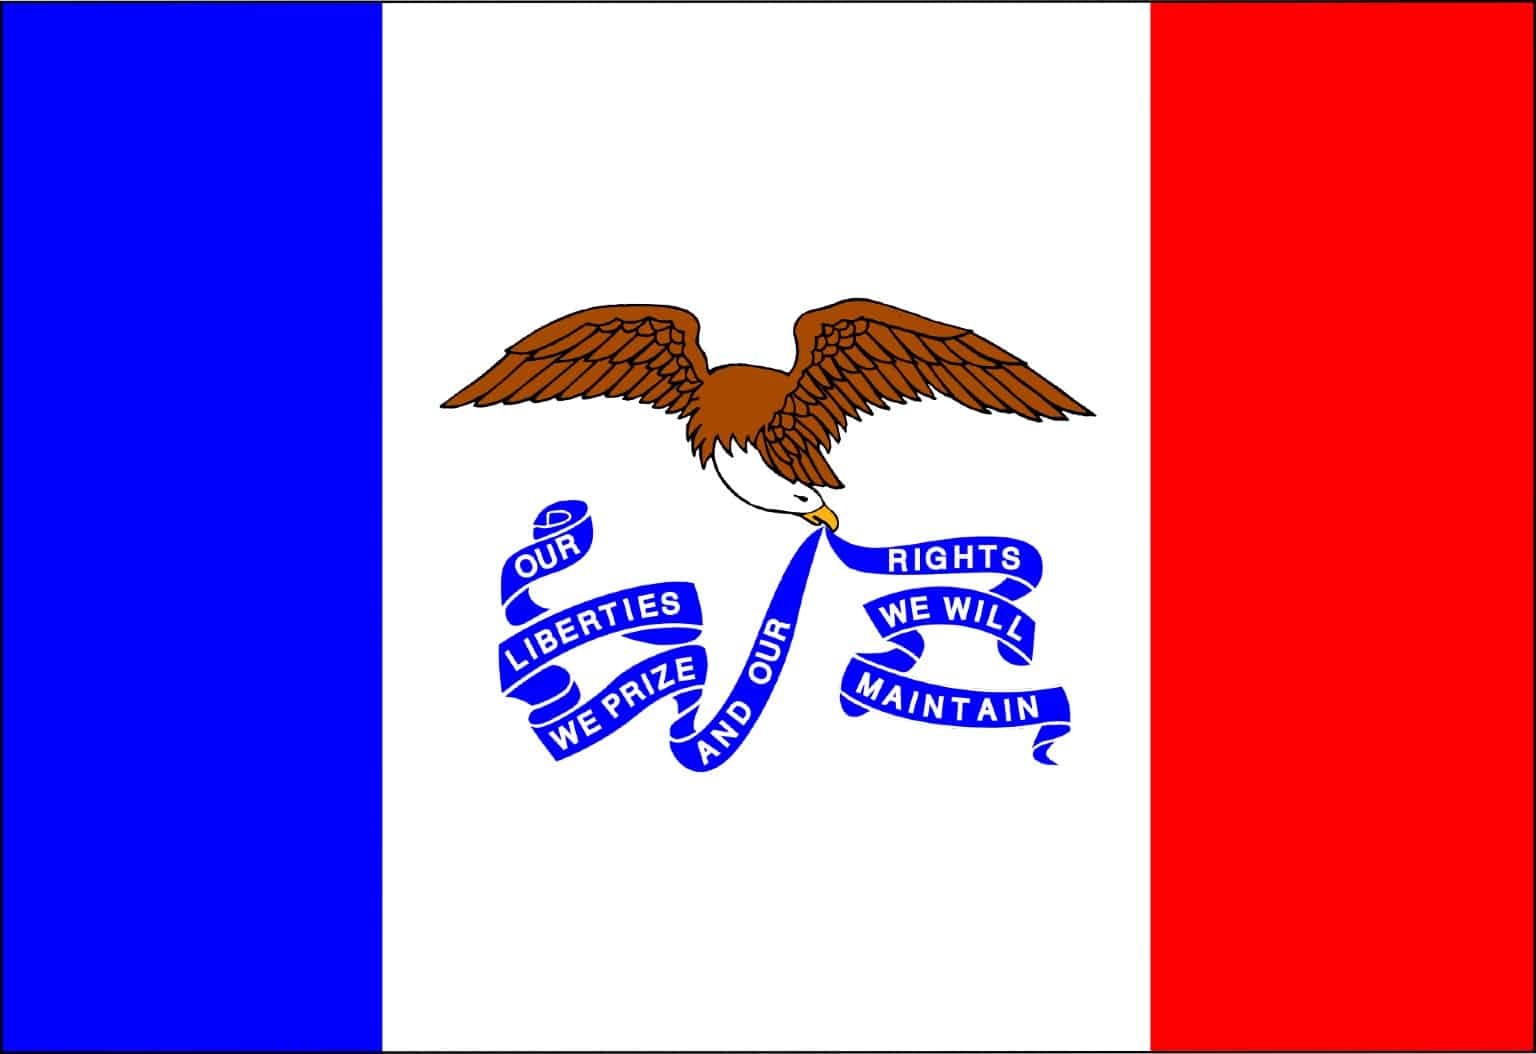 flag of iowa